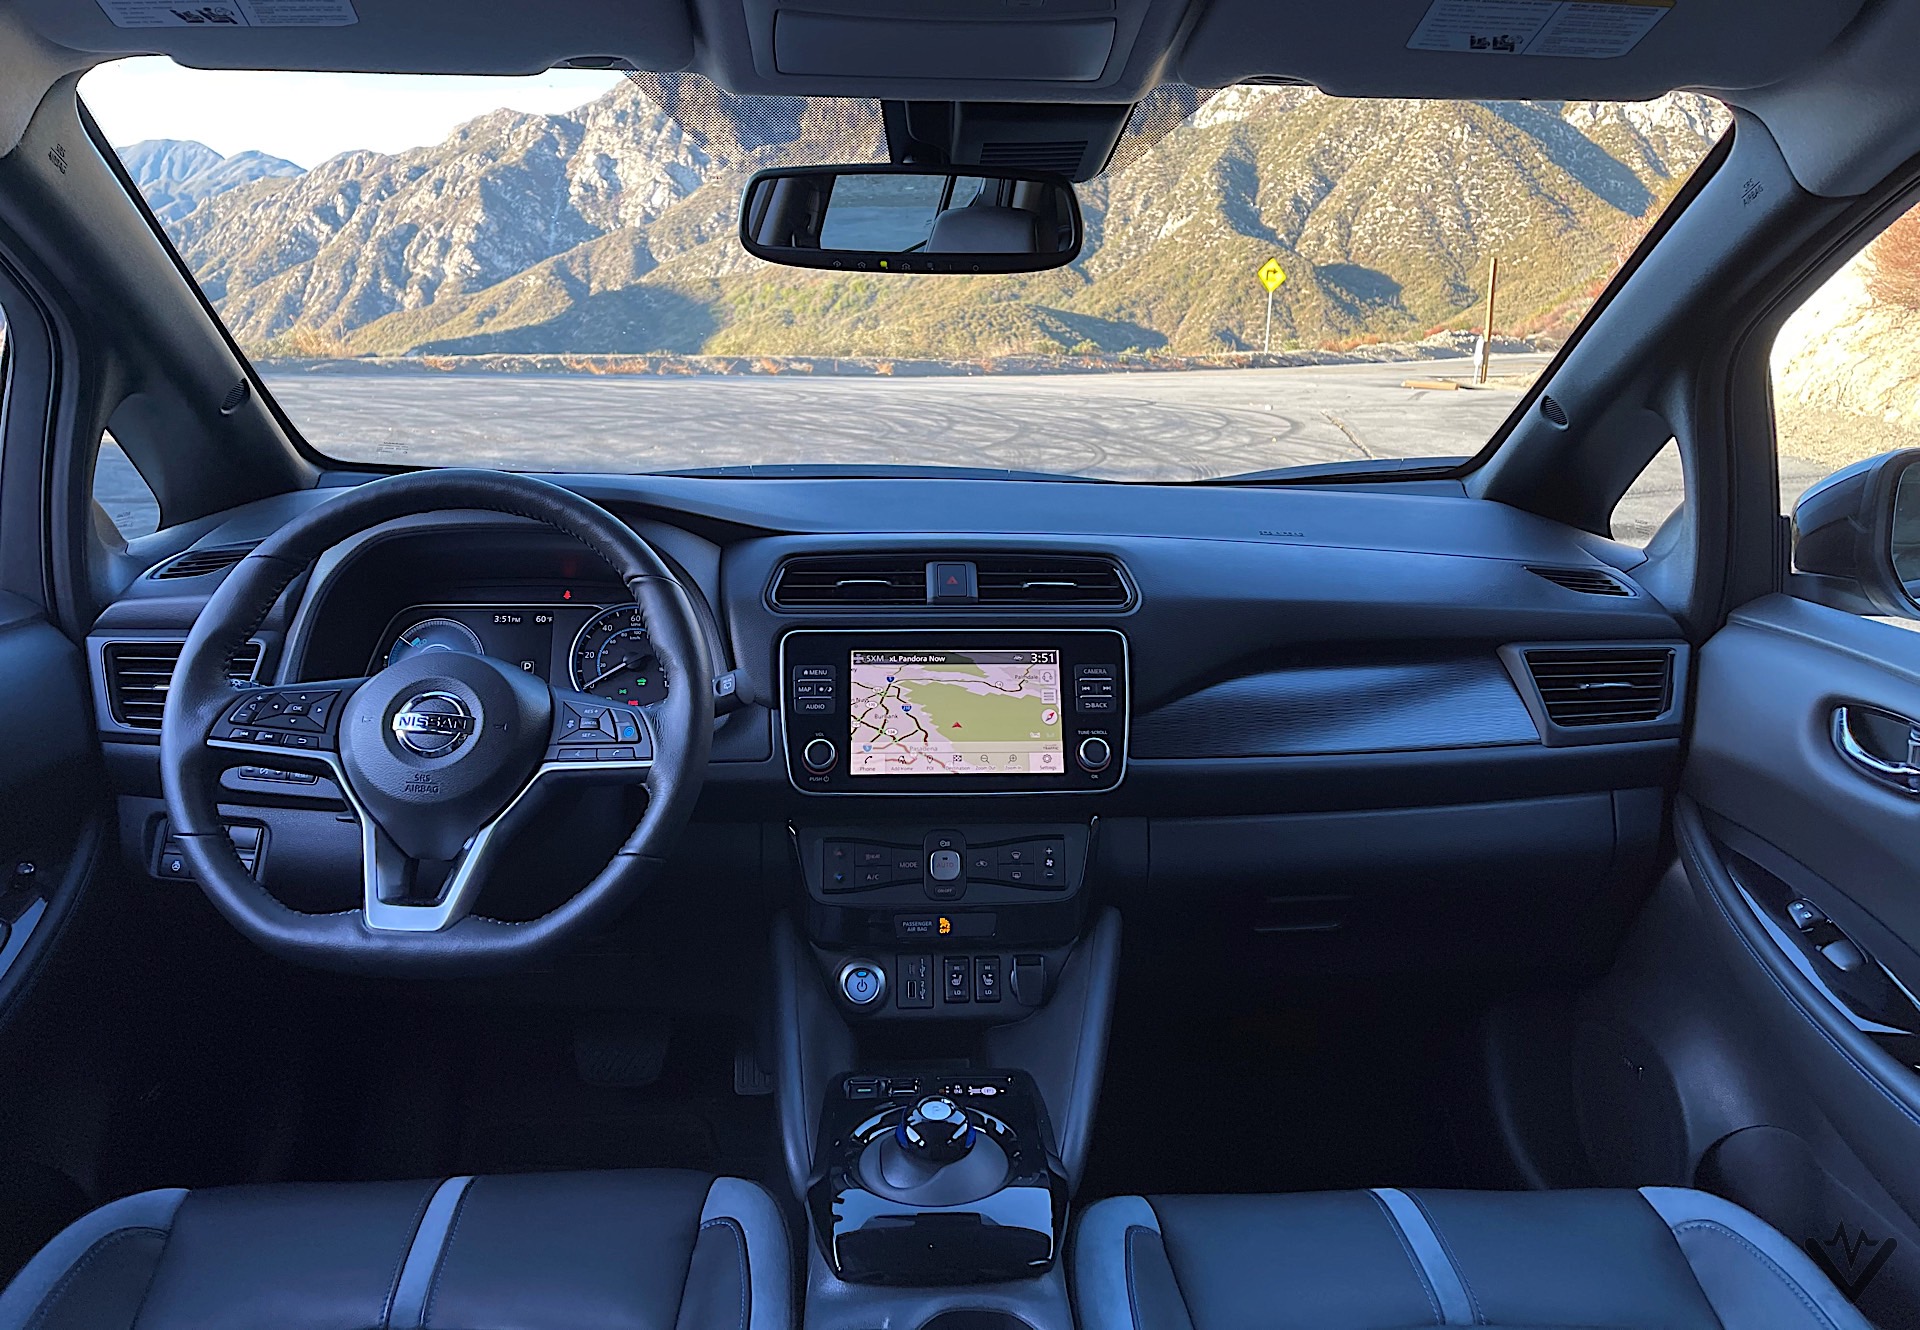 2021 Nissan Leaf interior 05 1